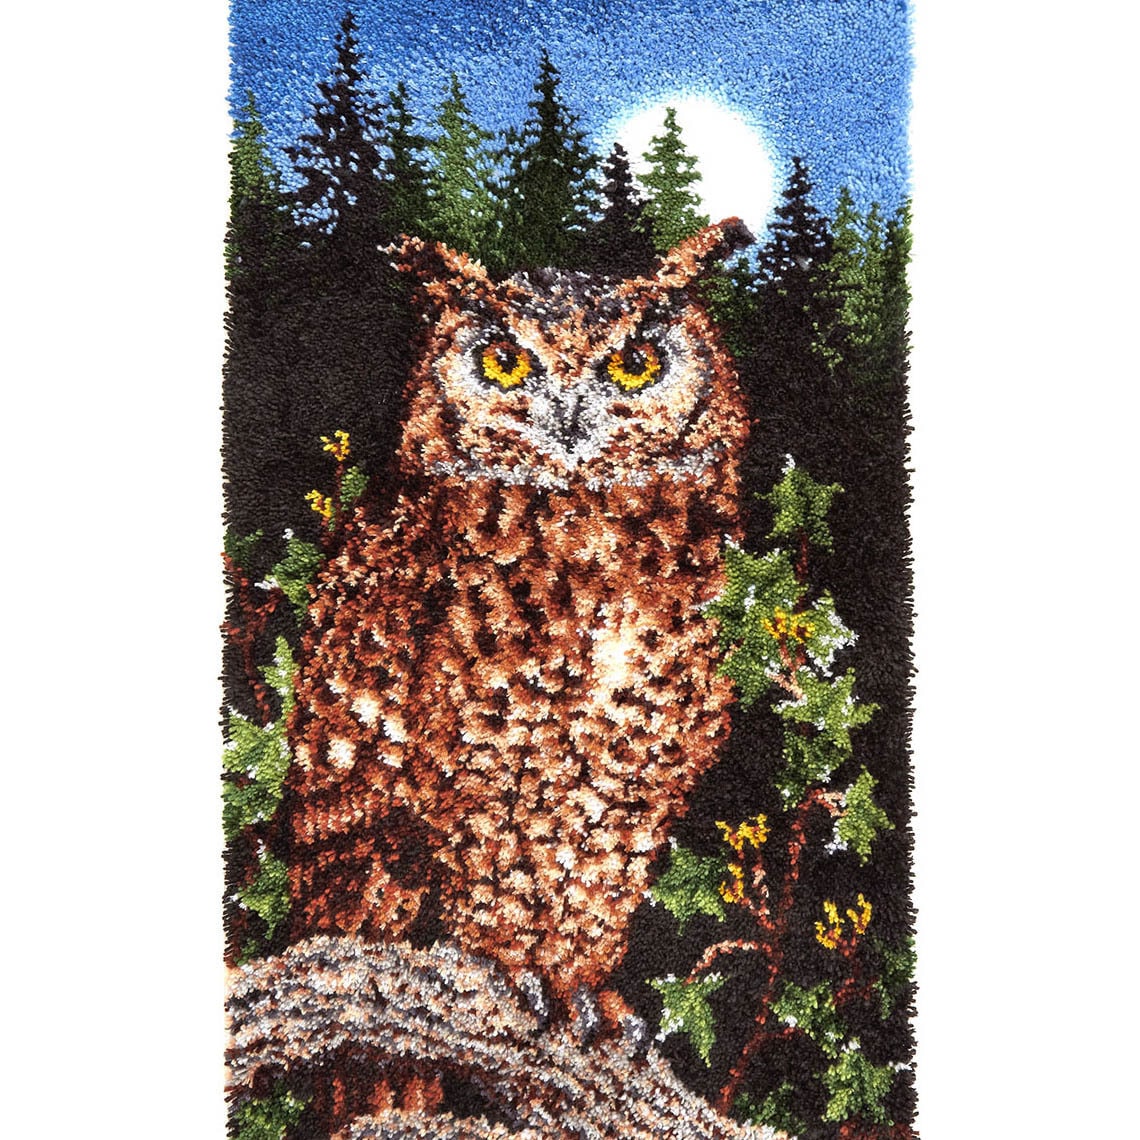 Owl Tissue Box Kit